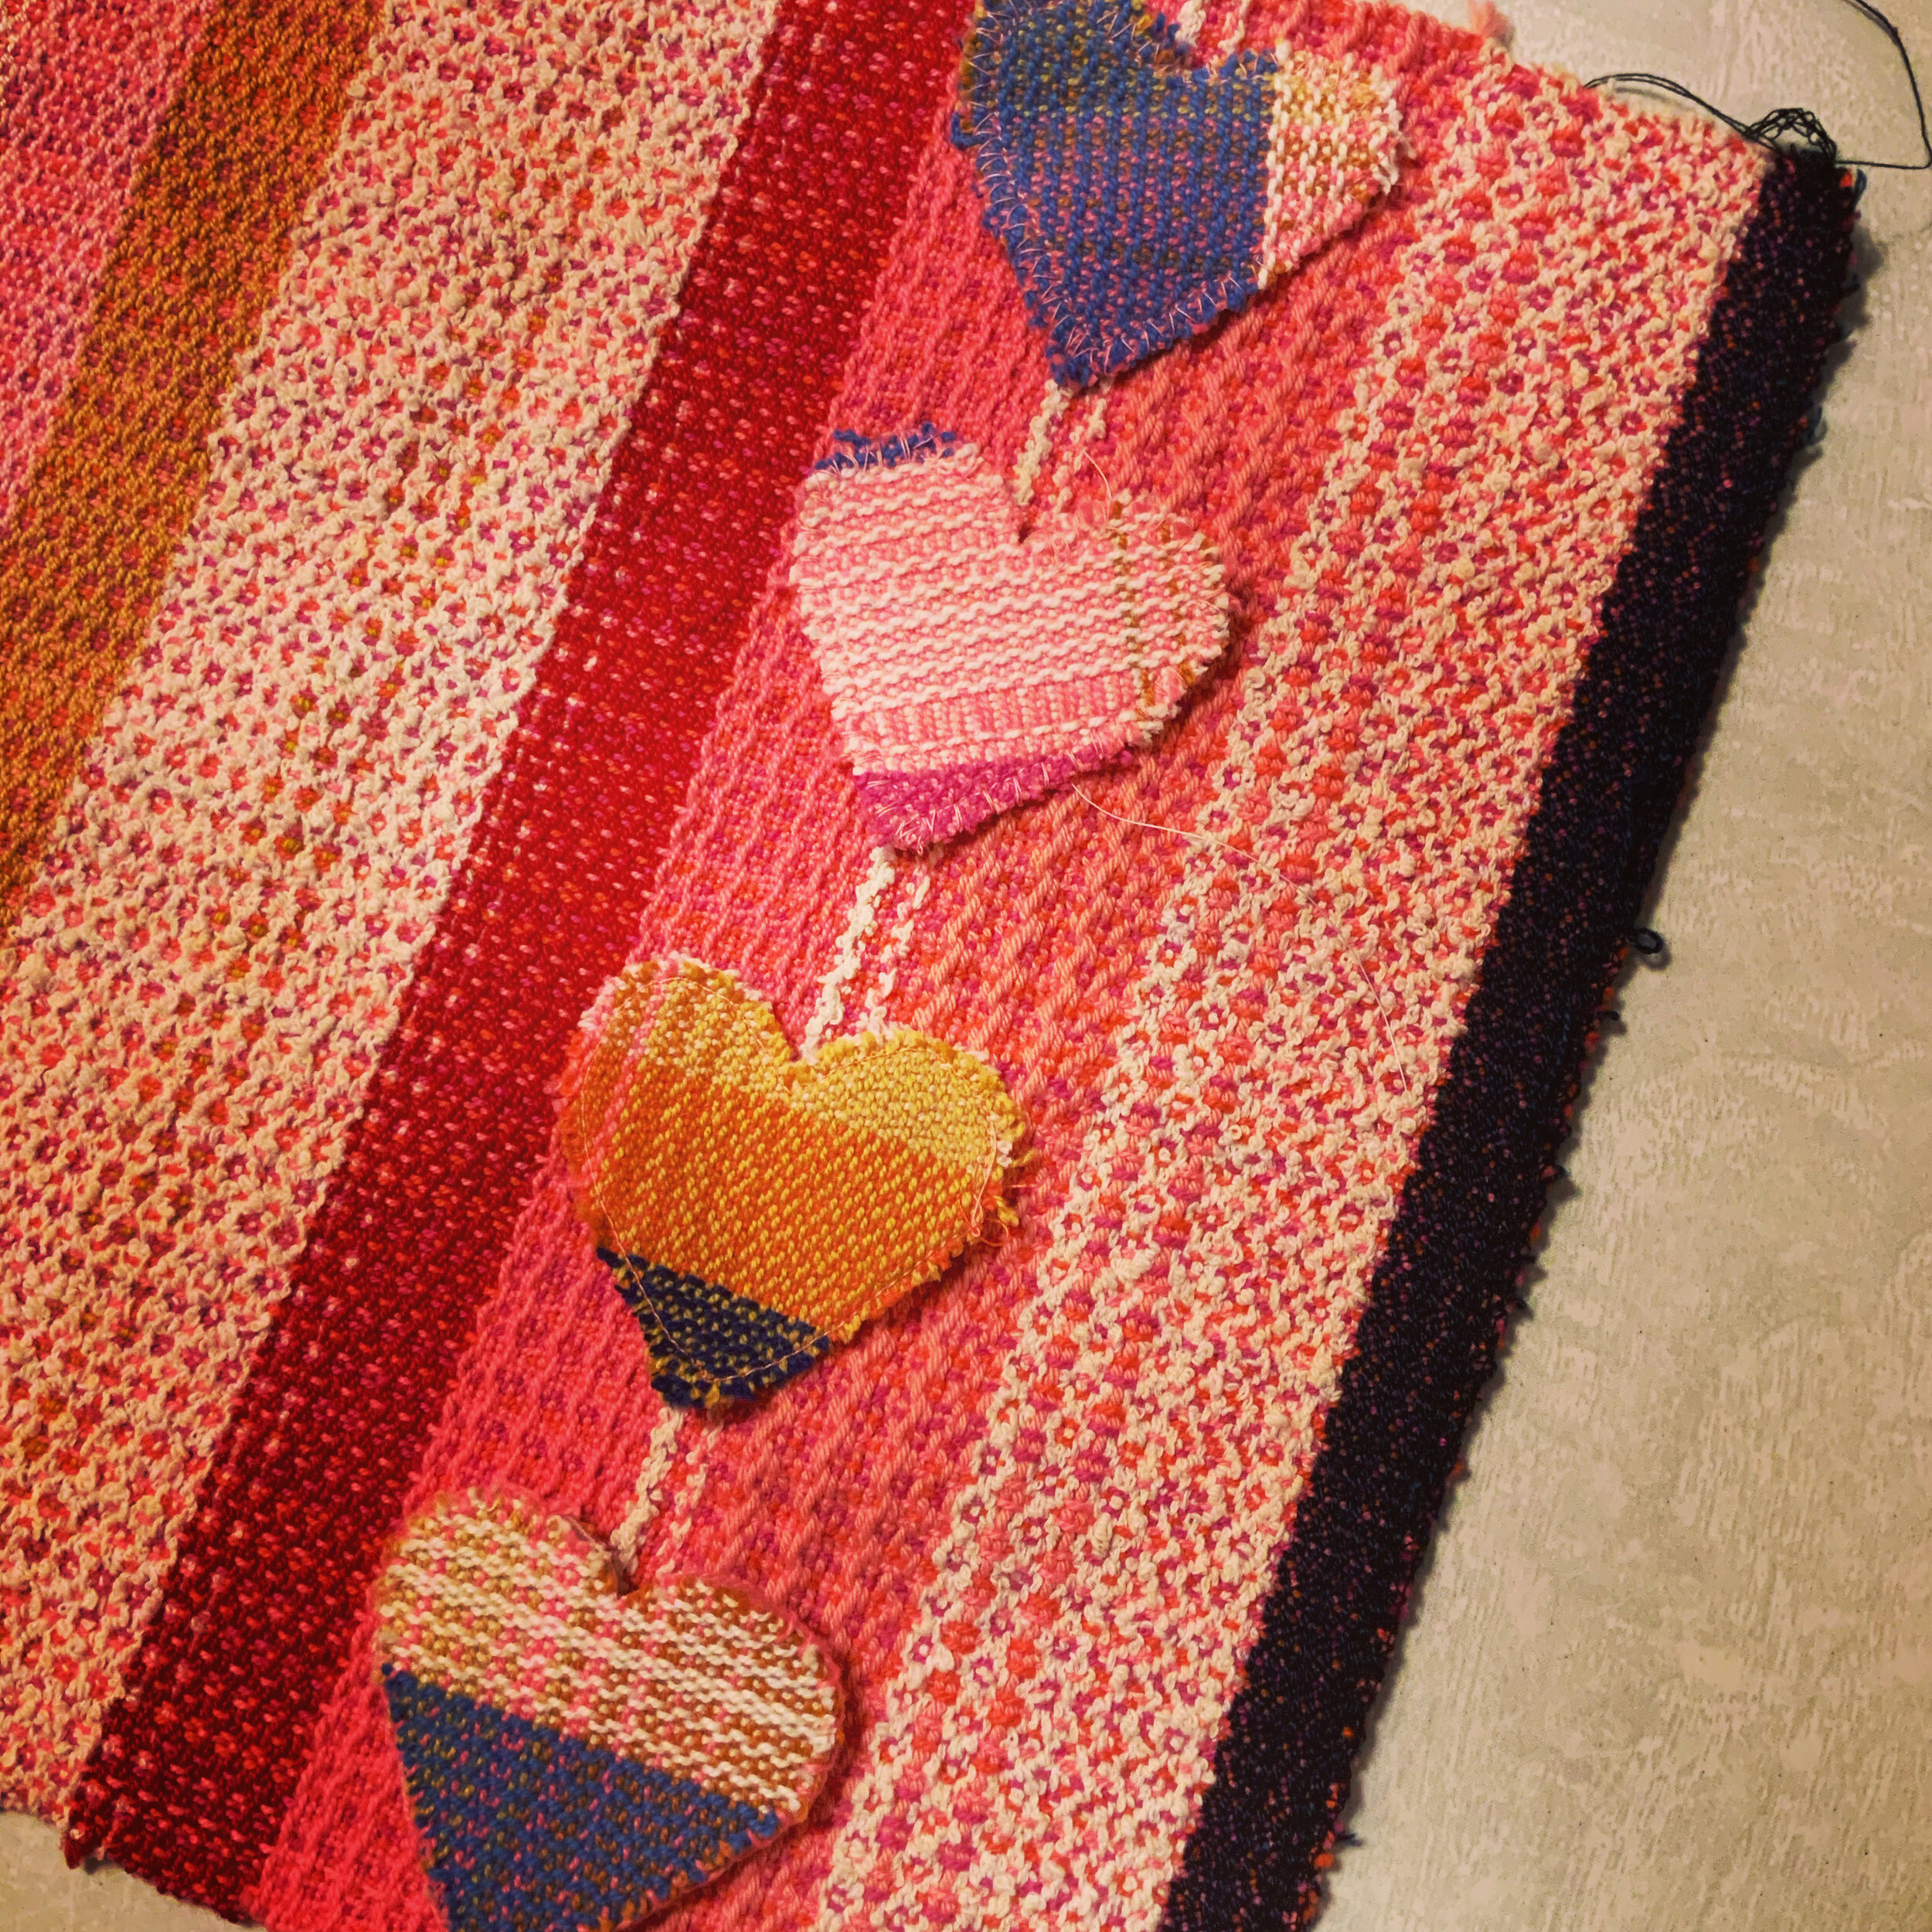 Hearts Woven Fabric Tina Knop Morse